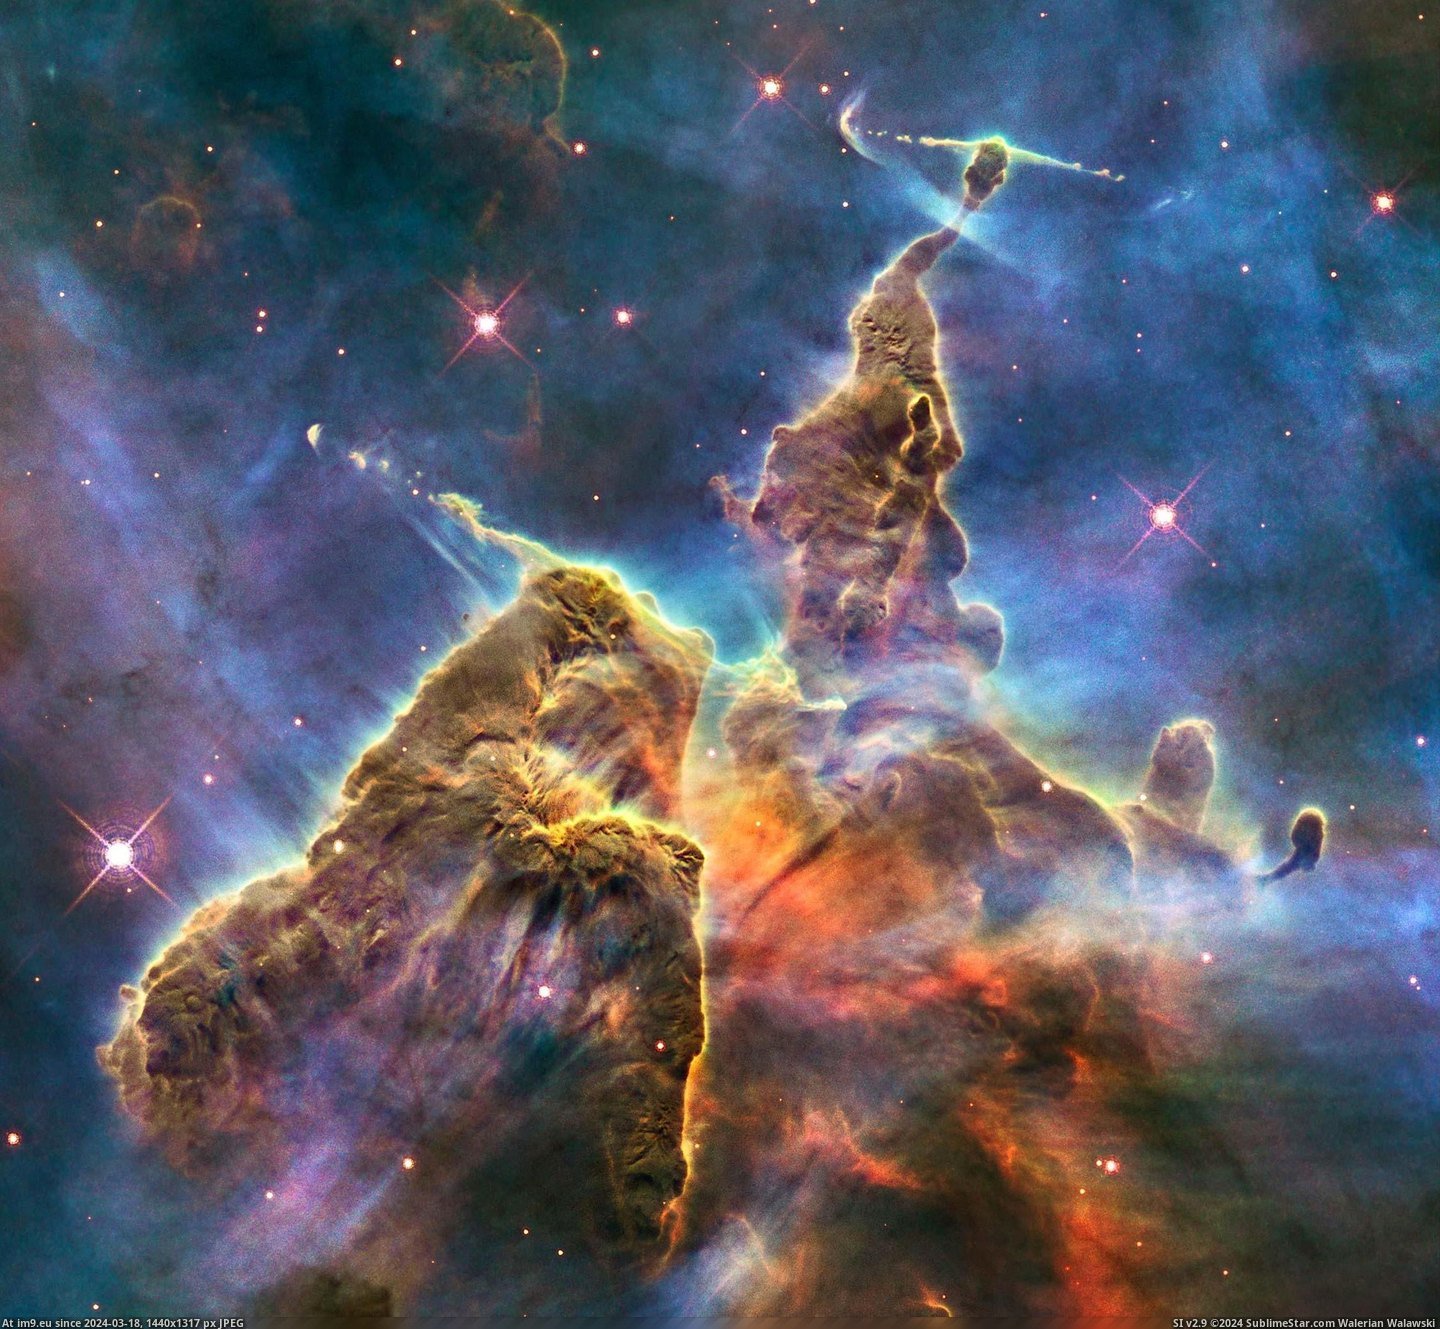 #Mountain #Captures #Mystic #Hubble [Pics] Hubble captures view of “Mystic Mountain” Pic. (Image of album My r/PICS favs))